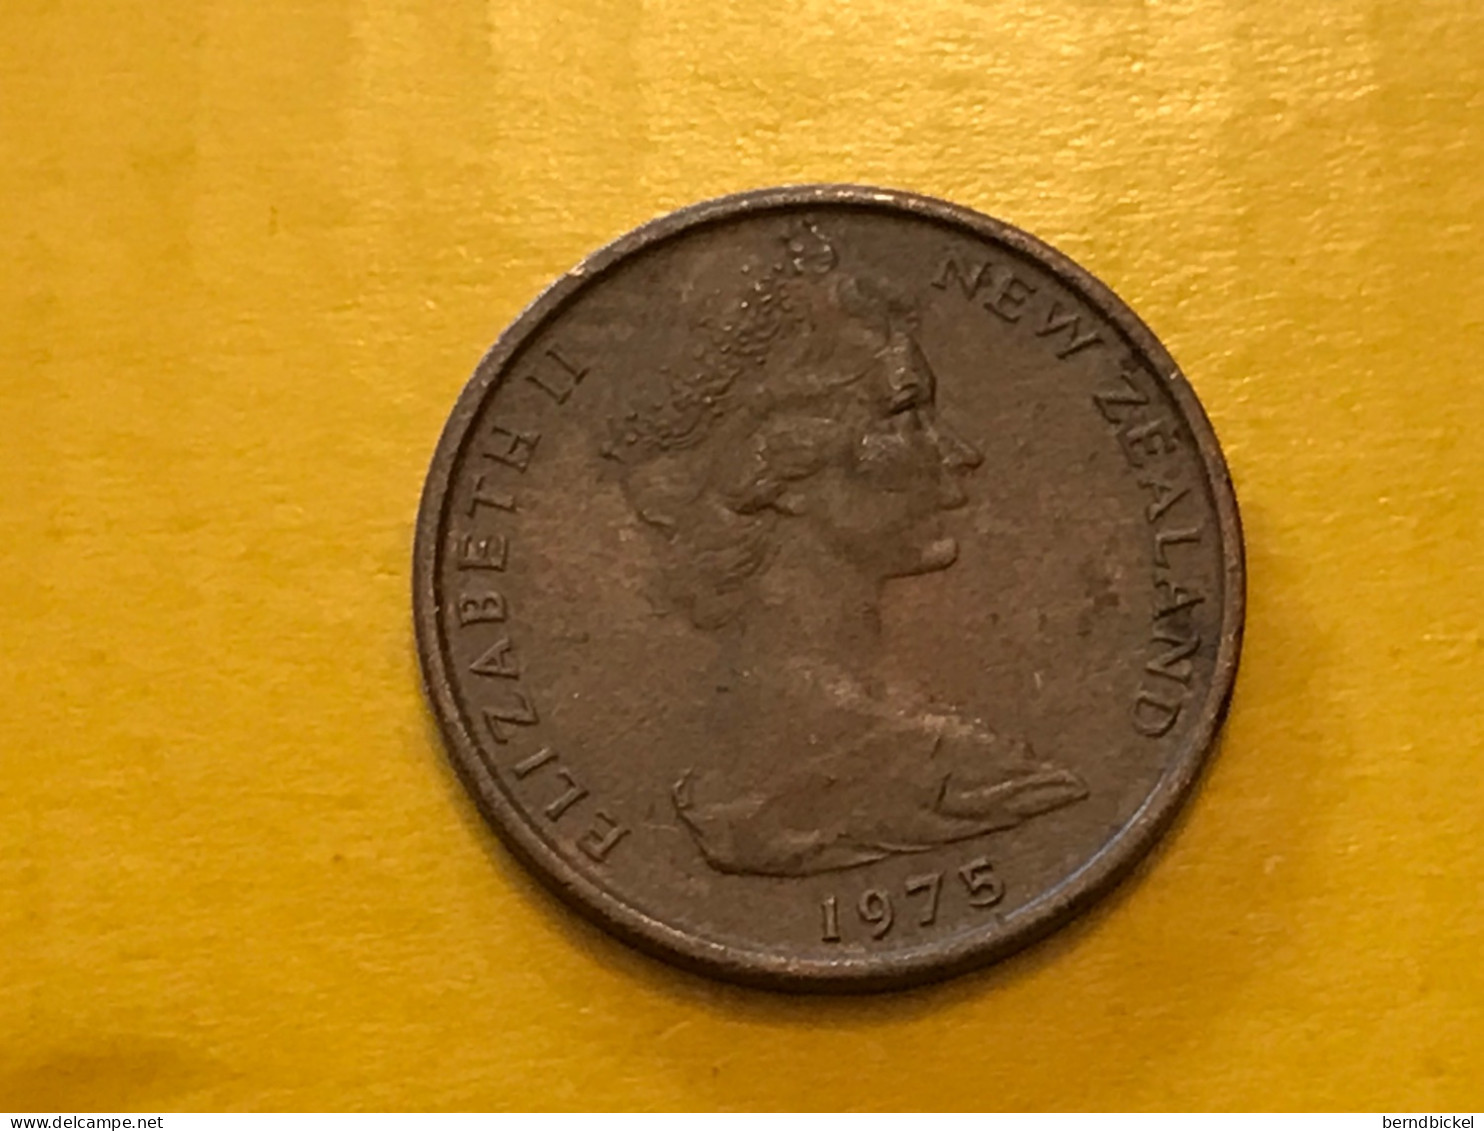 Münze Münzen Umlaufmünze Neuseeland 1 Cent 1975 - Nouvelle-Zélande